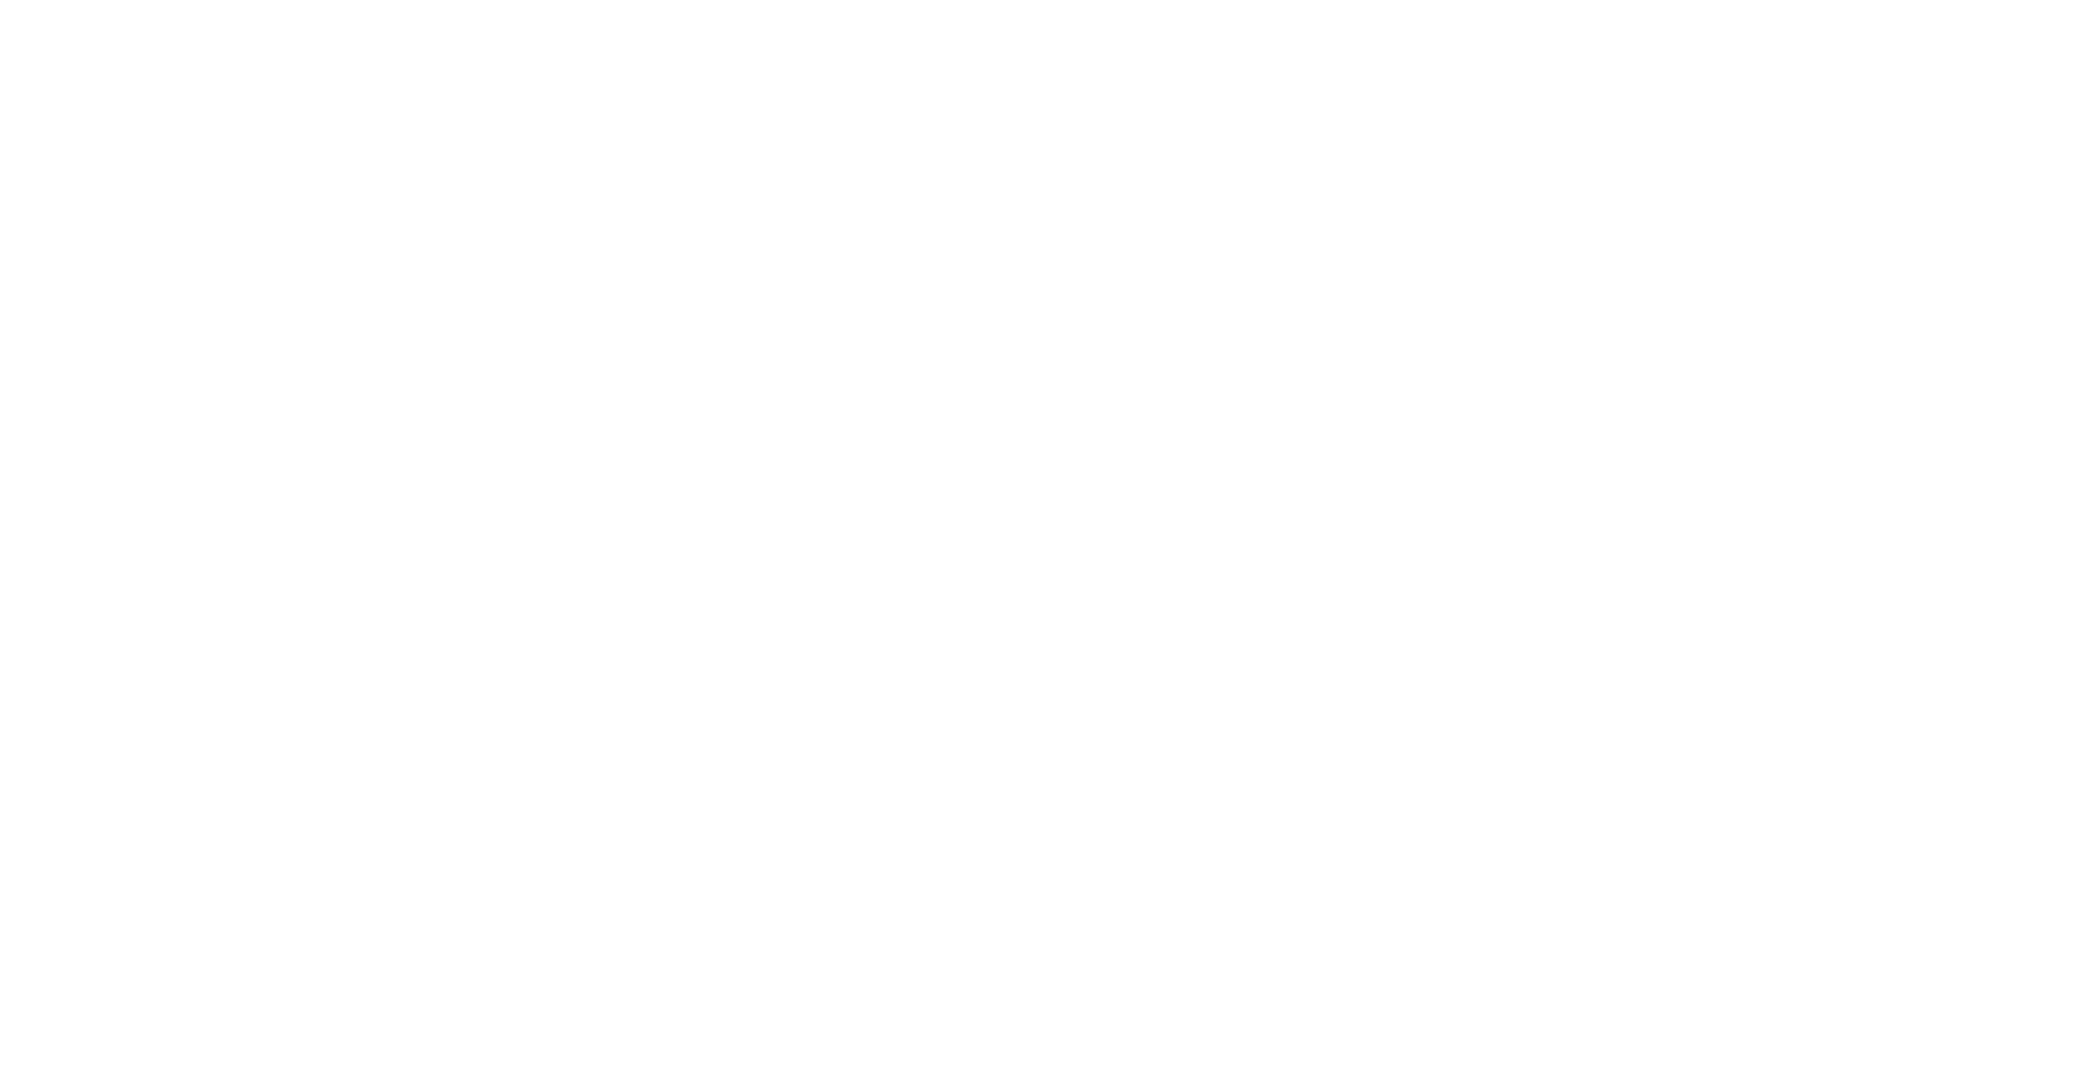 Small pixelated Brodan logo